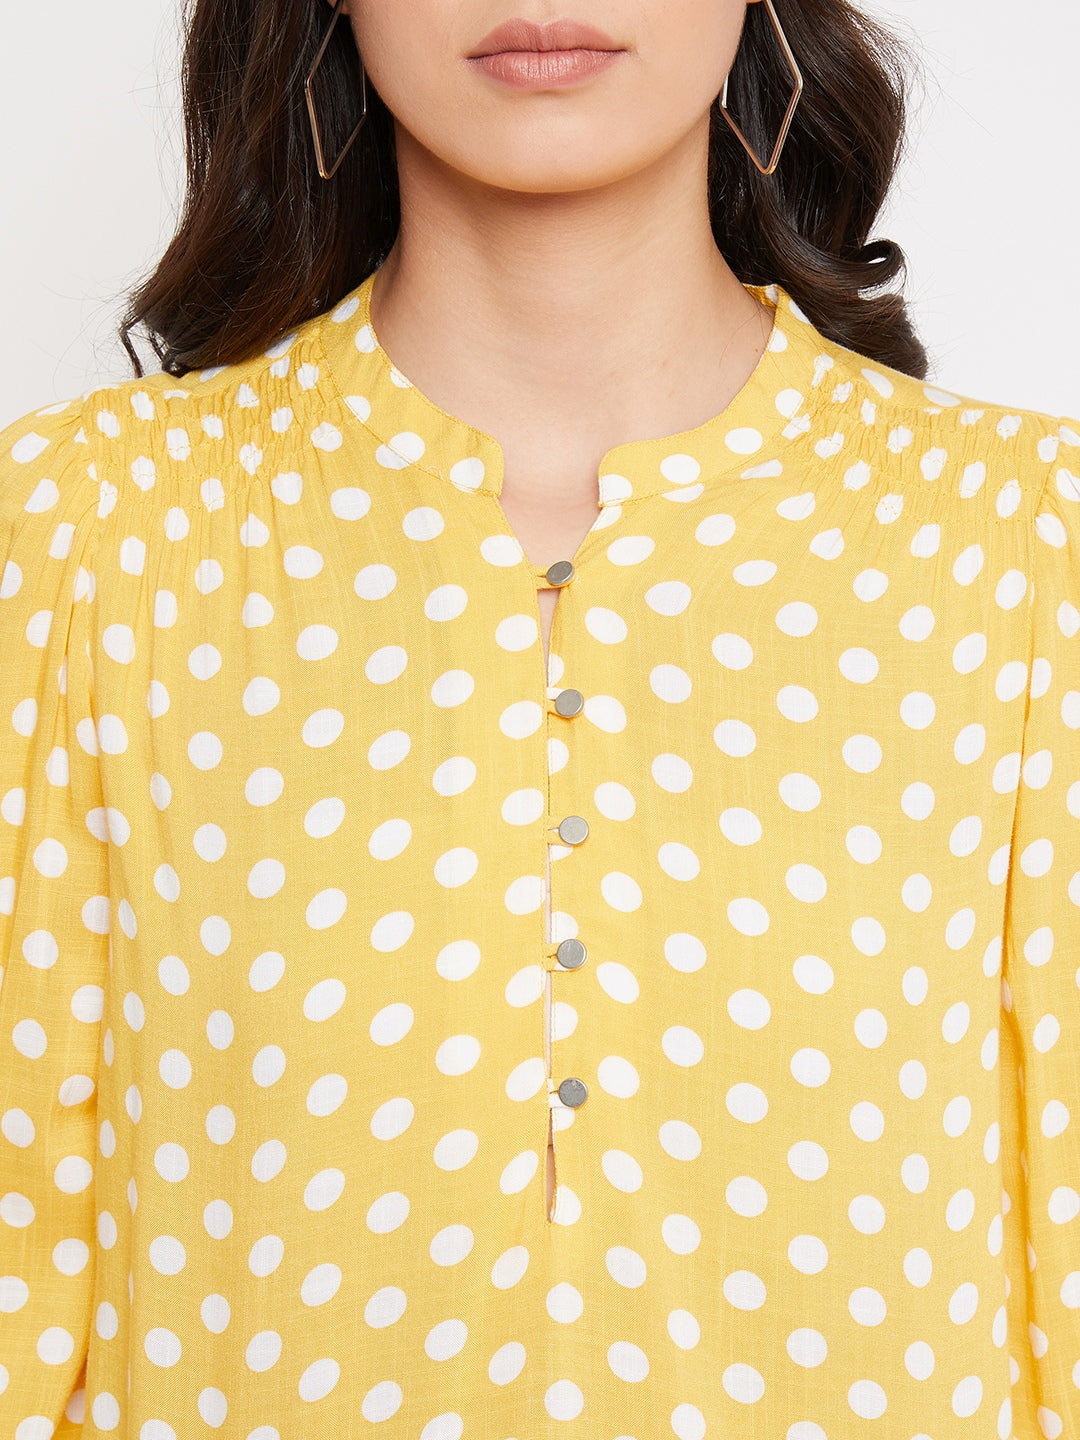 Yellow Polka Dots Tops - Women Tops